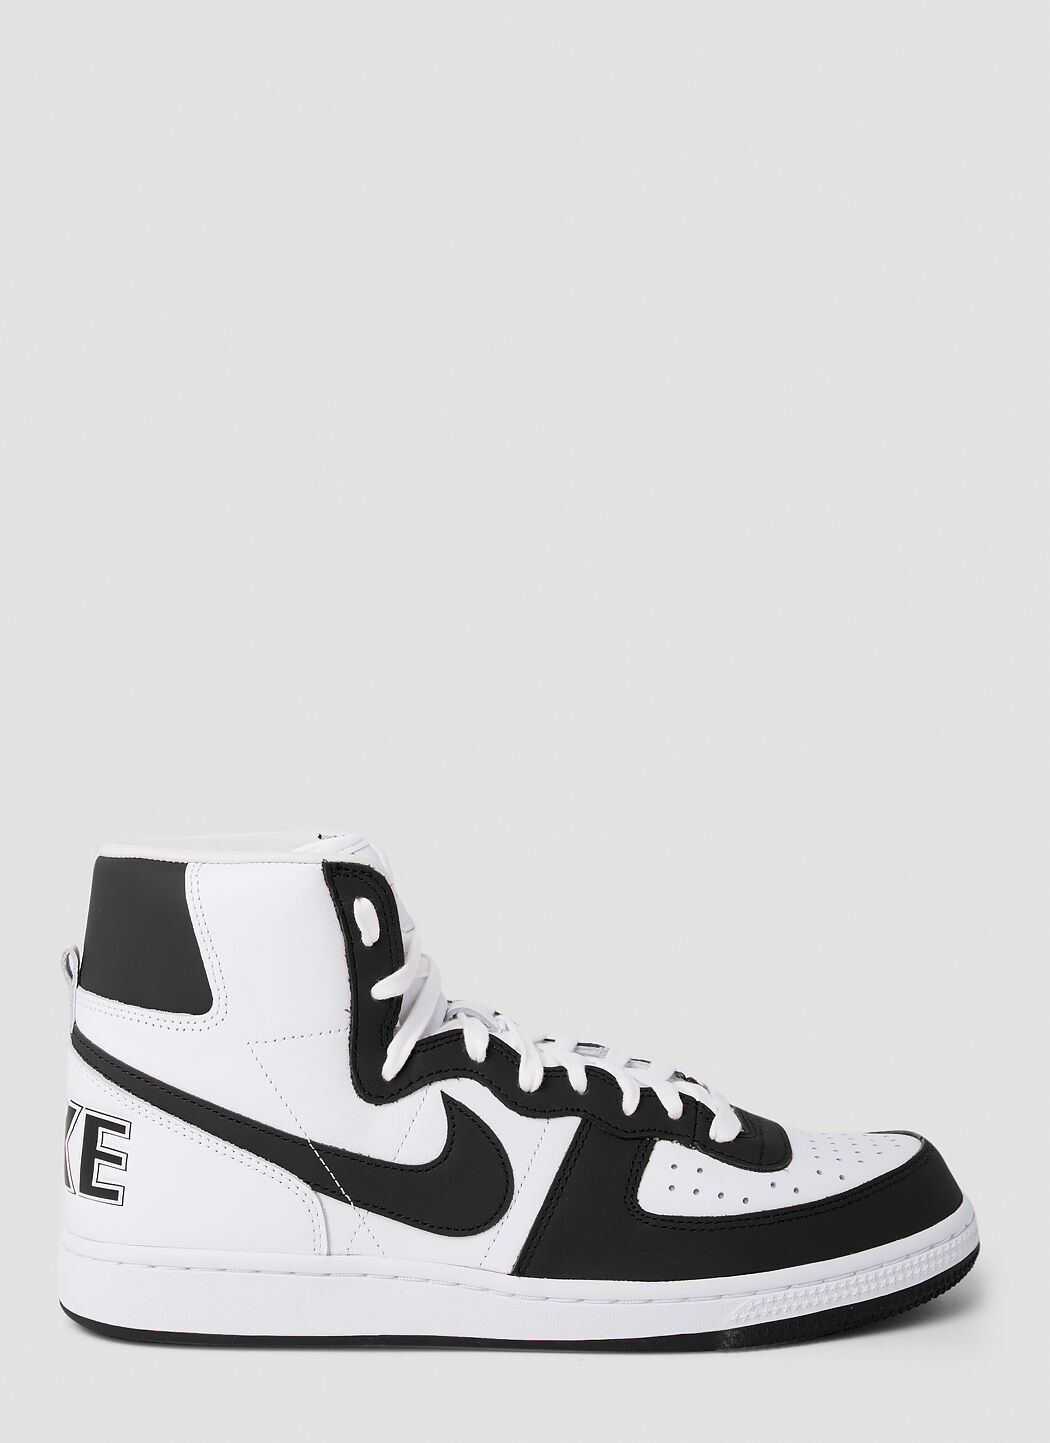 Comme des Garçons Homme Plus x Nike x Nike Terminator Sneakers 白色 cgh0154002